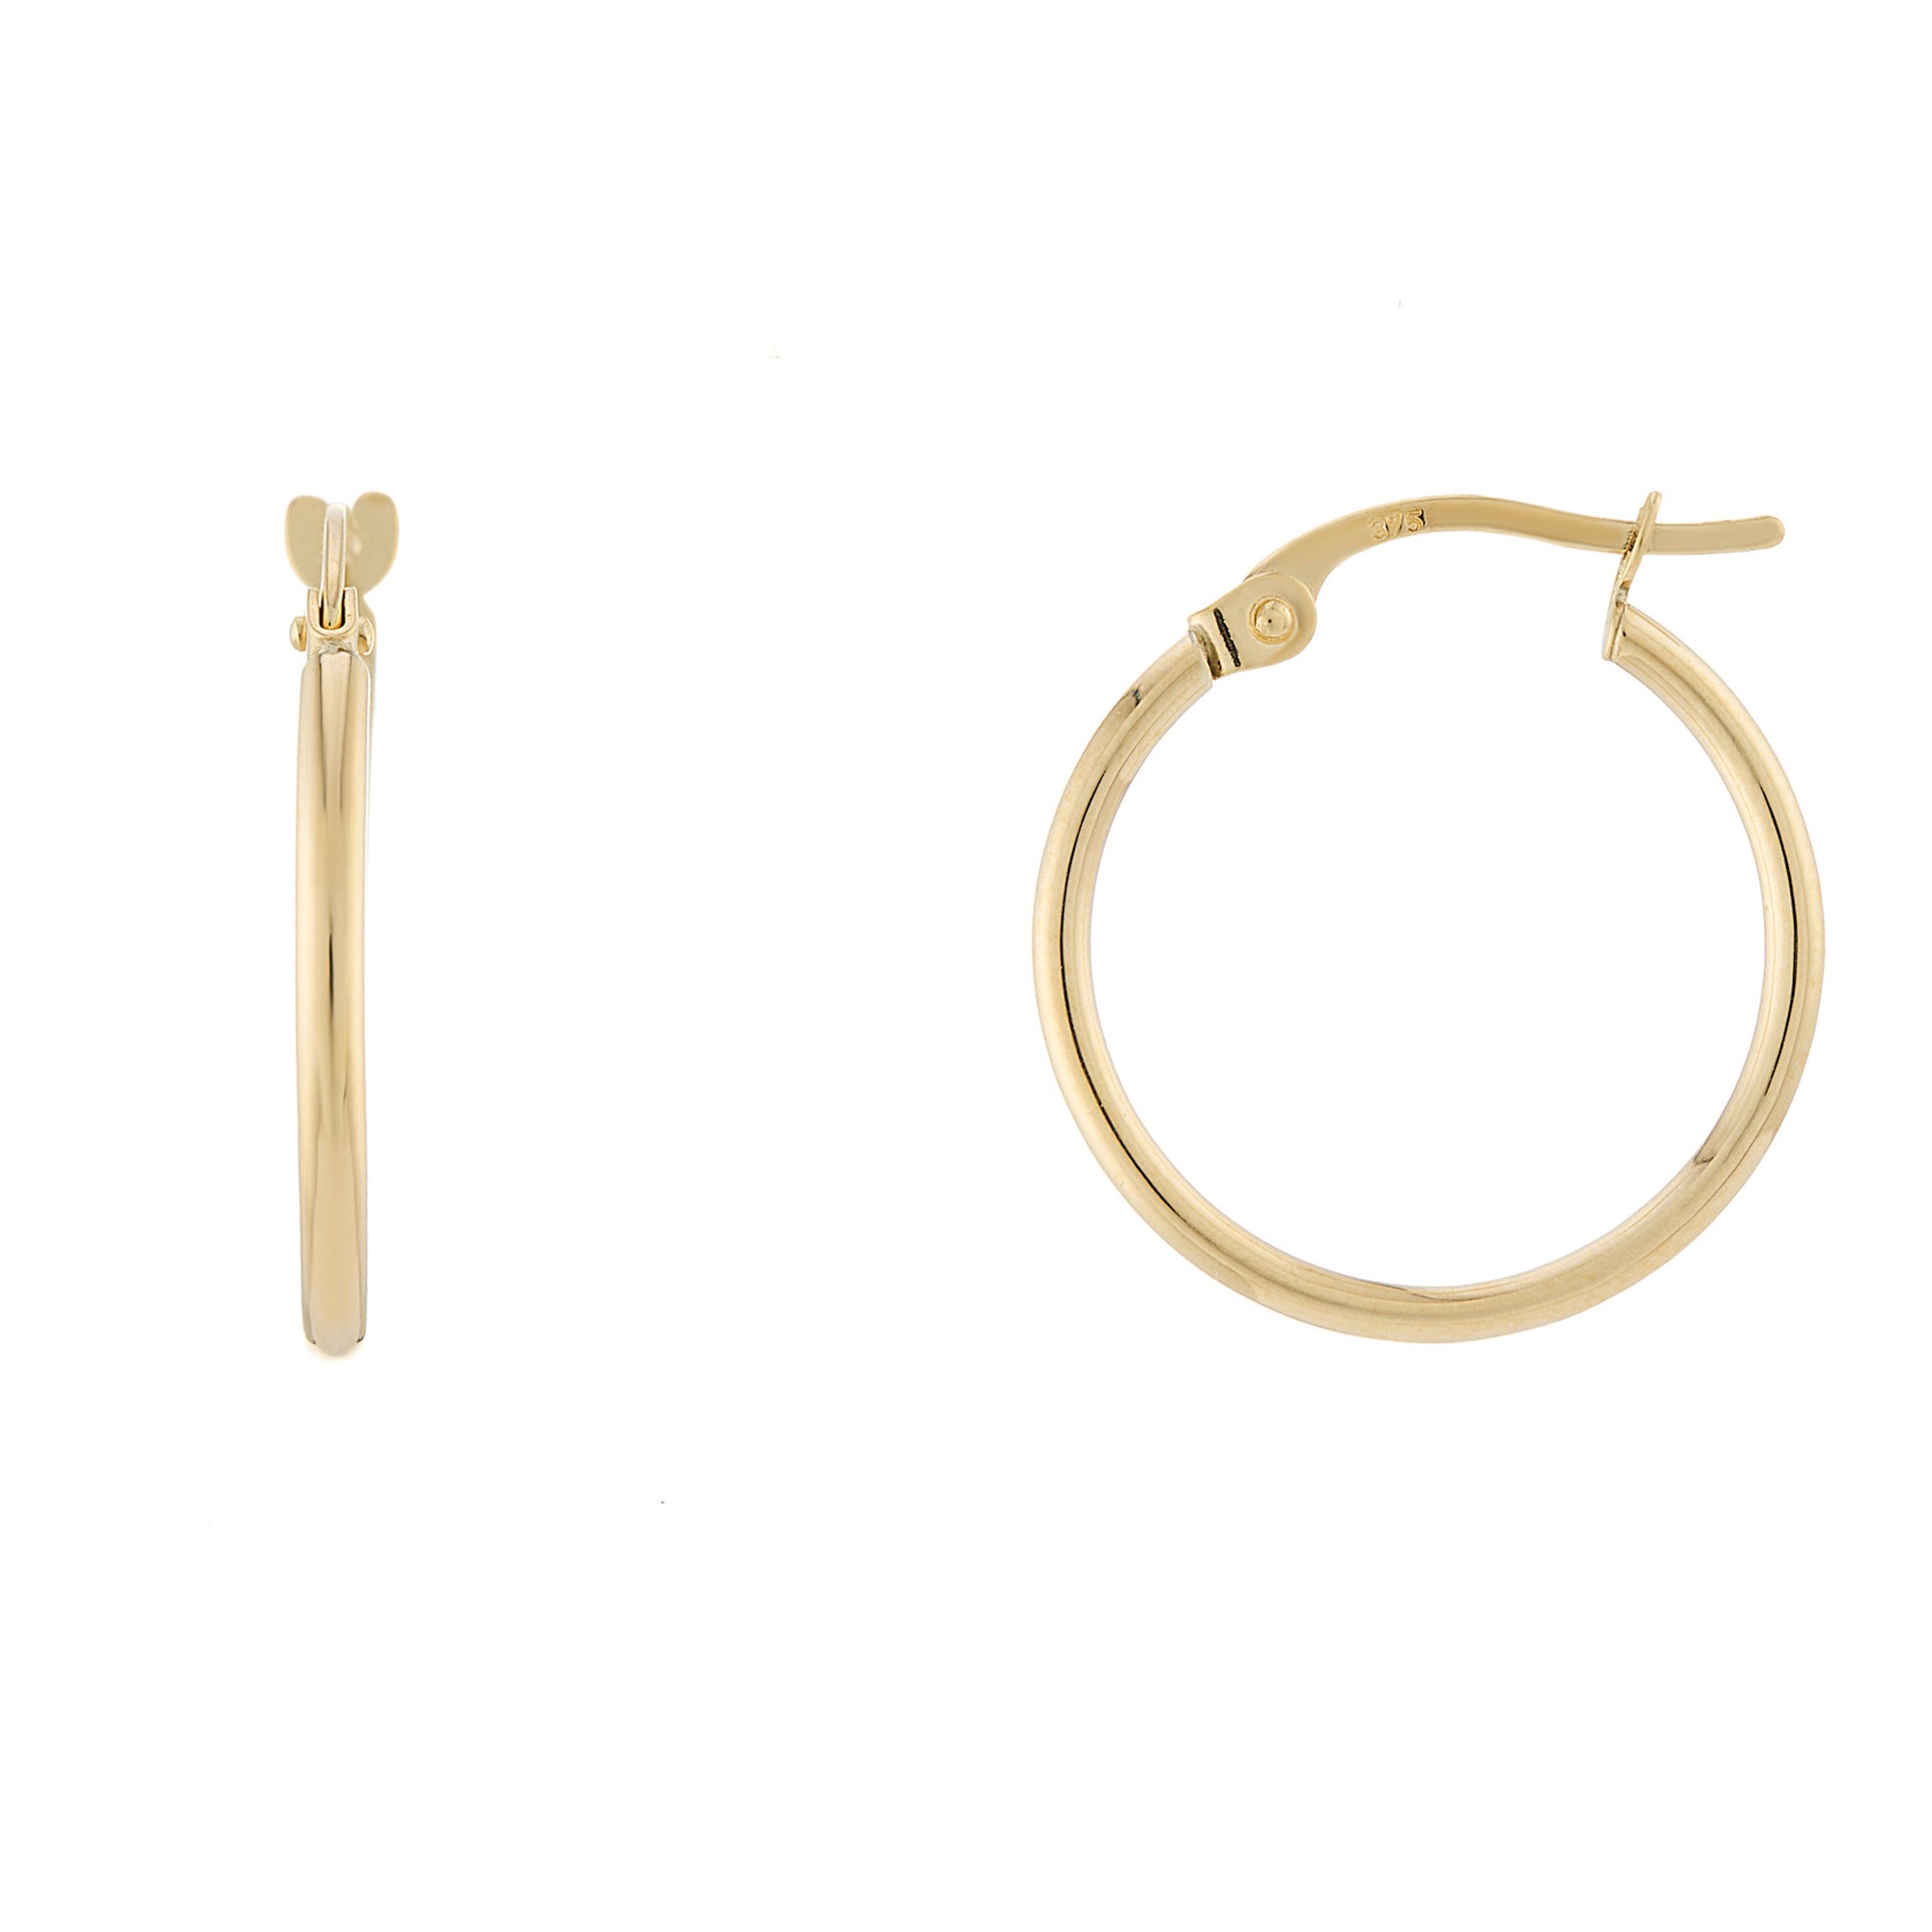 9ct gold 1.5mm x 15mm plain hoop earrings